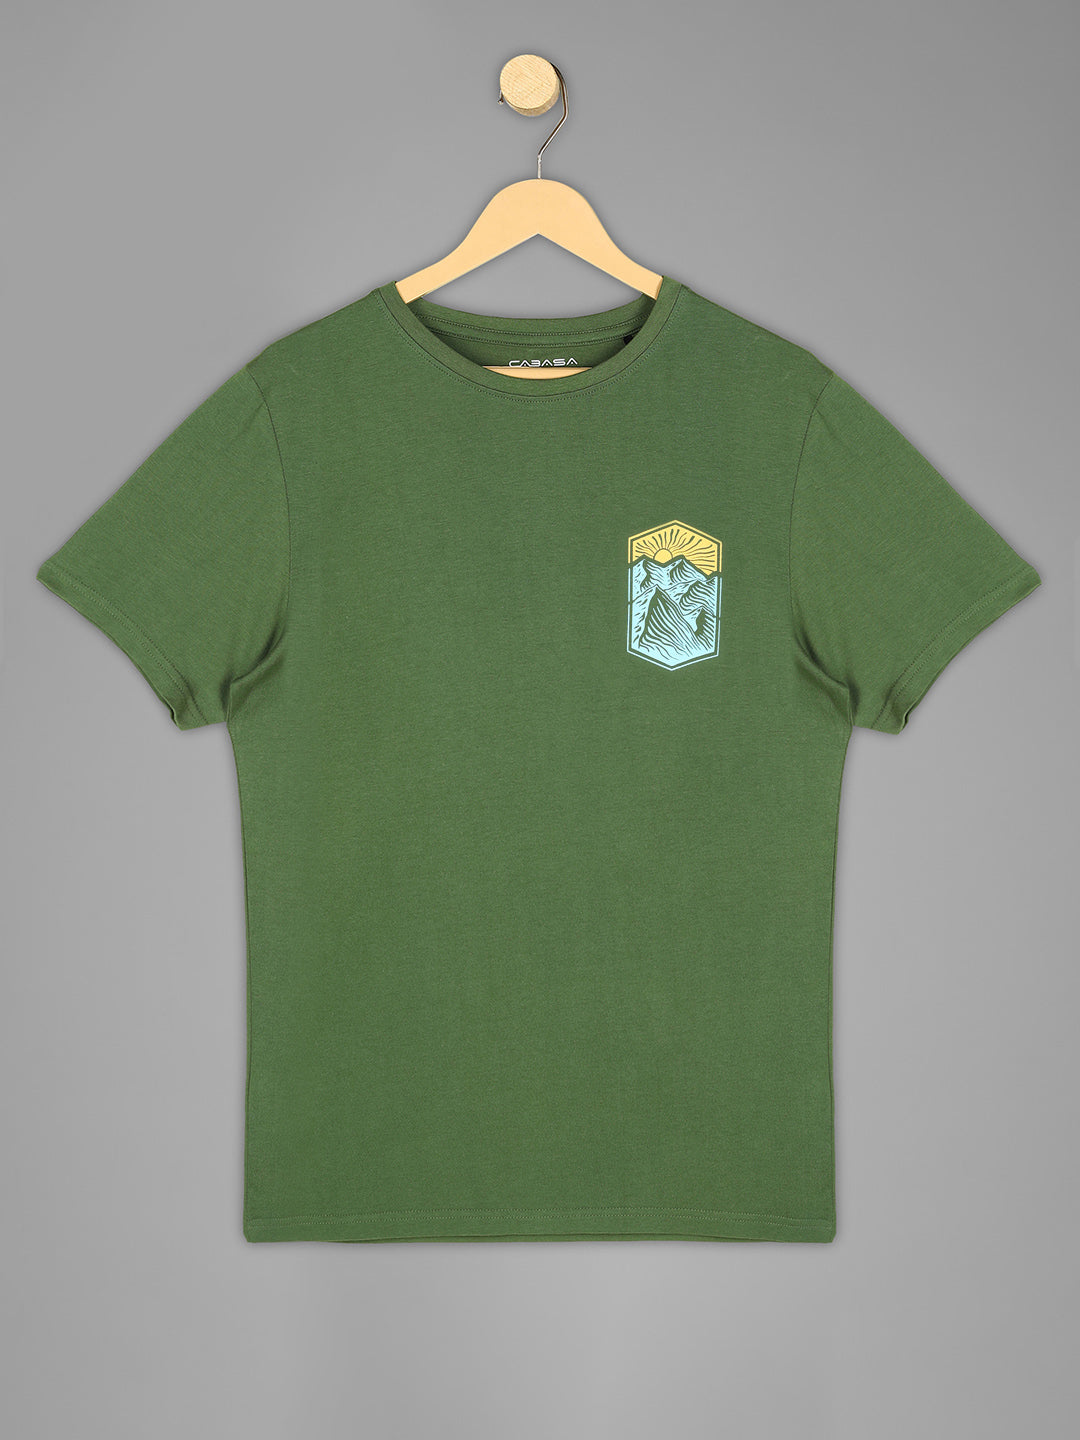 Dan Sunrise - Printed Men's Tshirt - Dry Olive Green